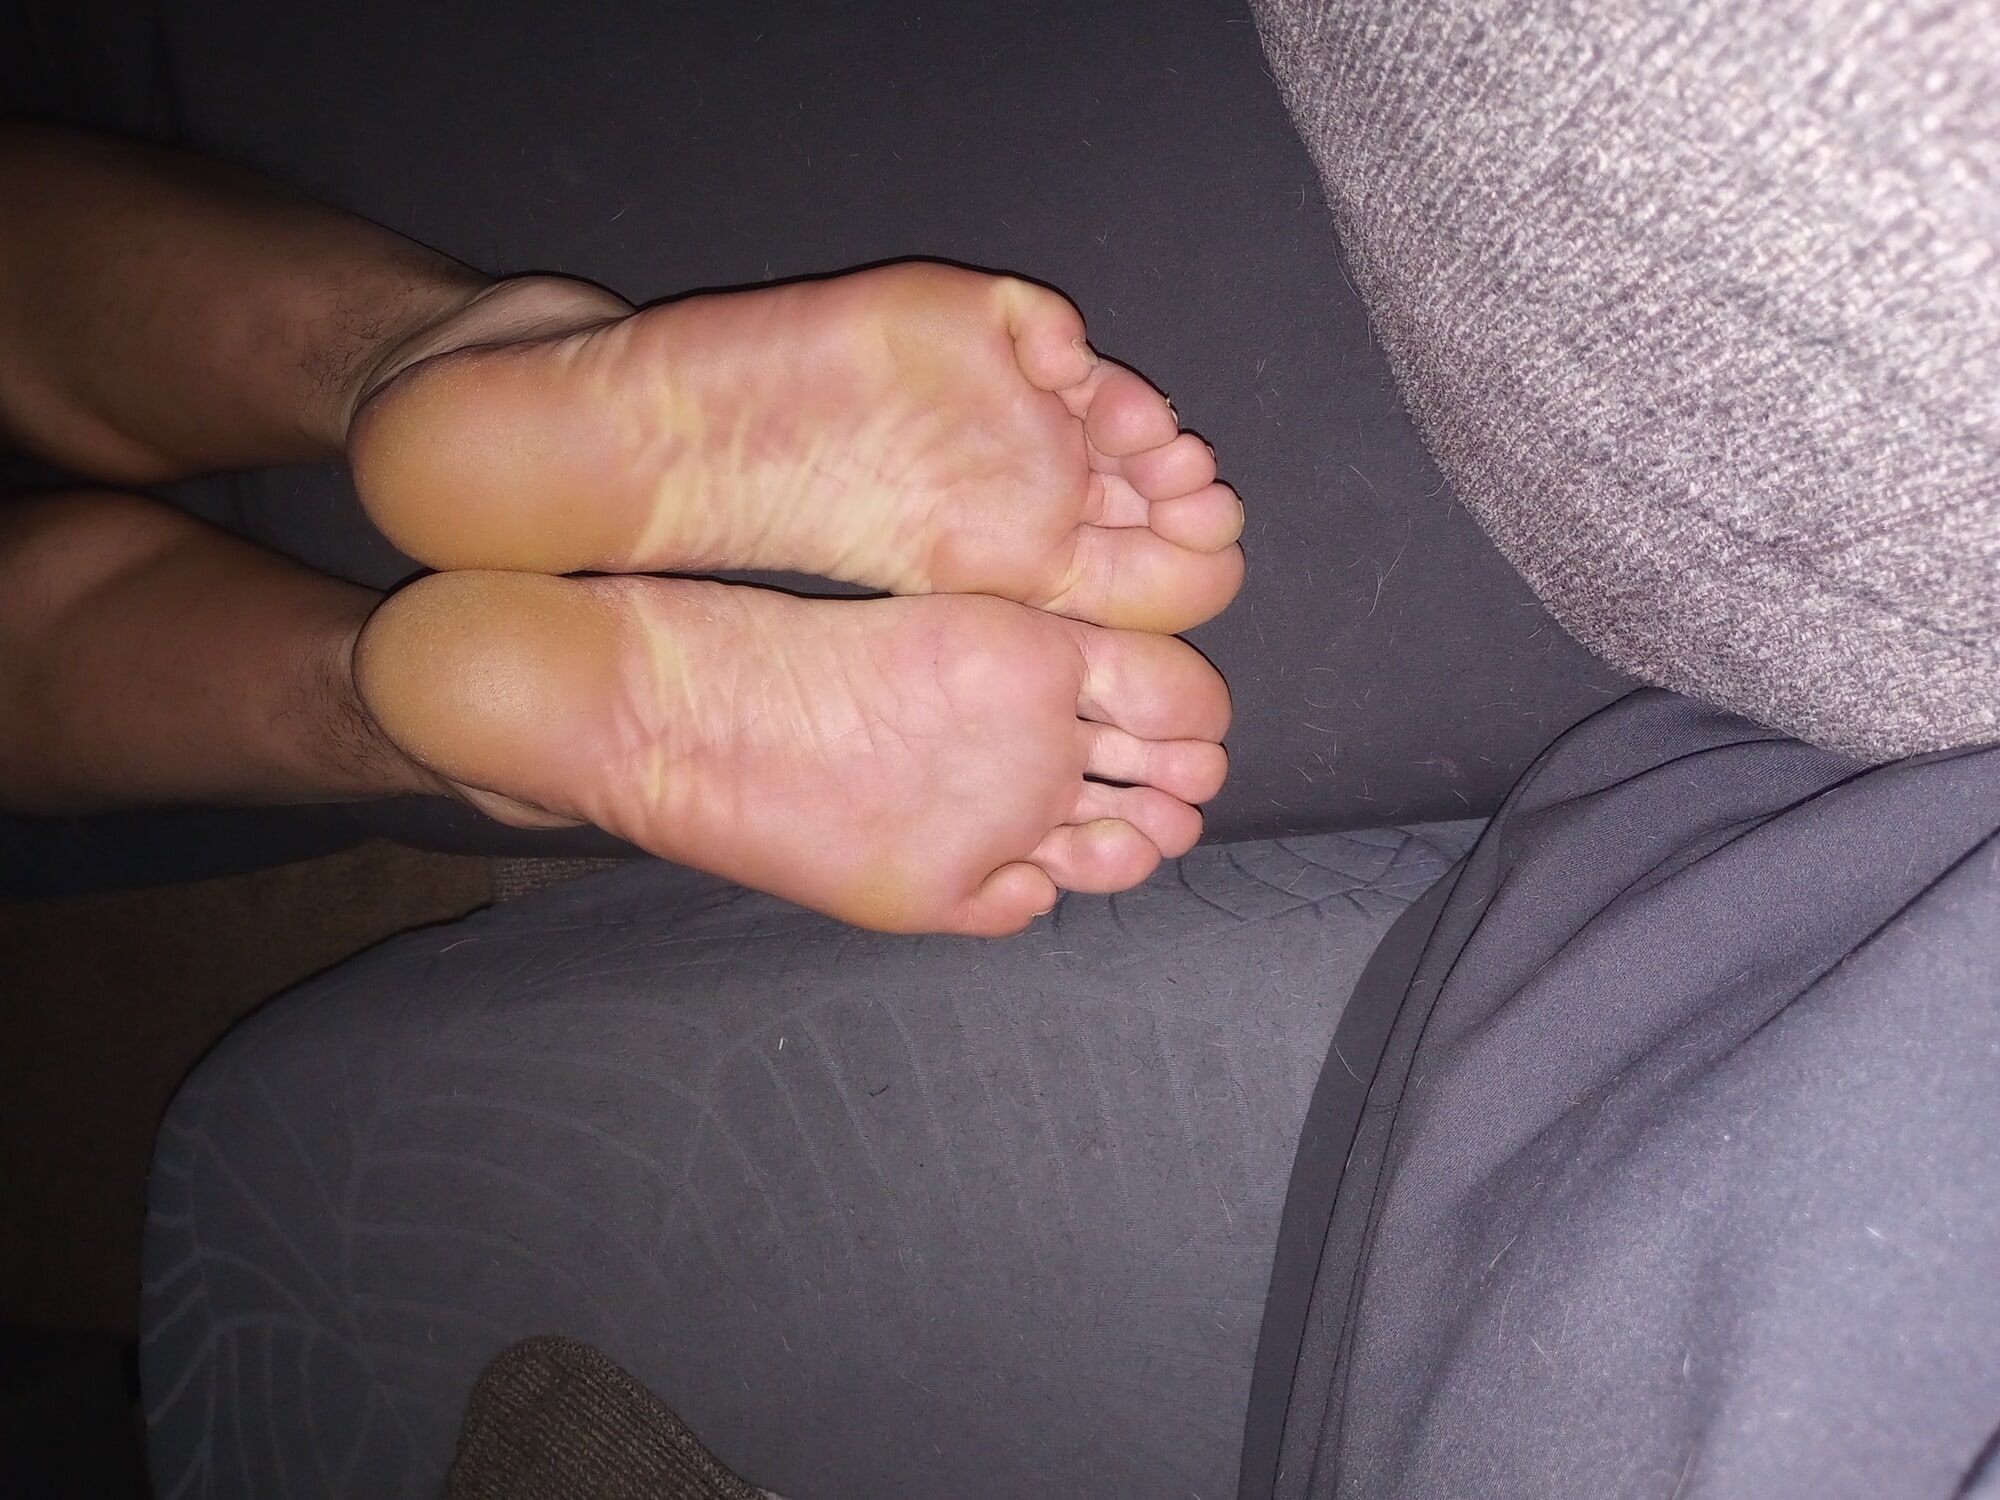 Sleepy feet soles and toes